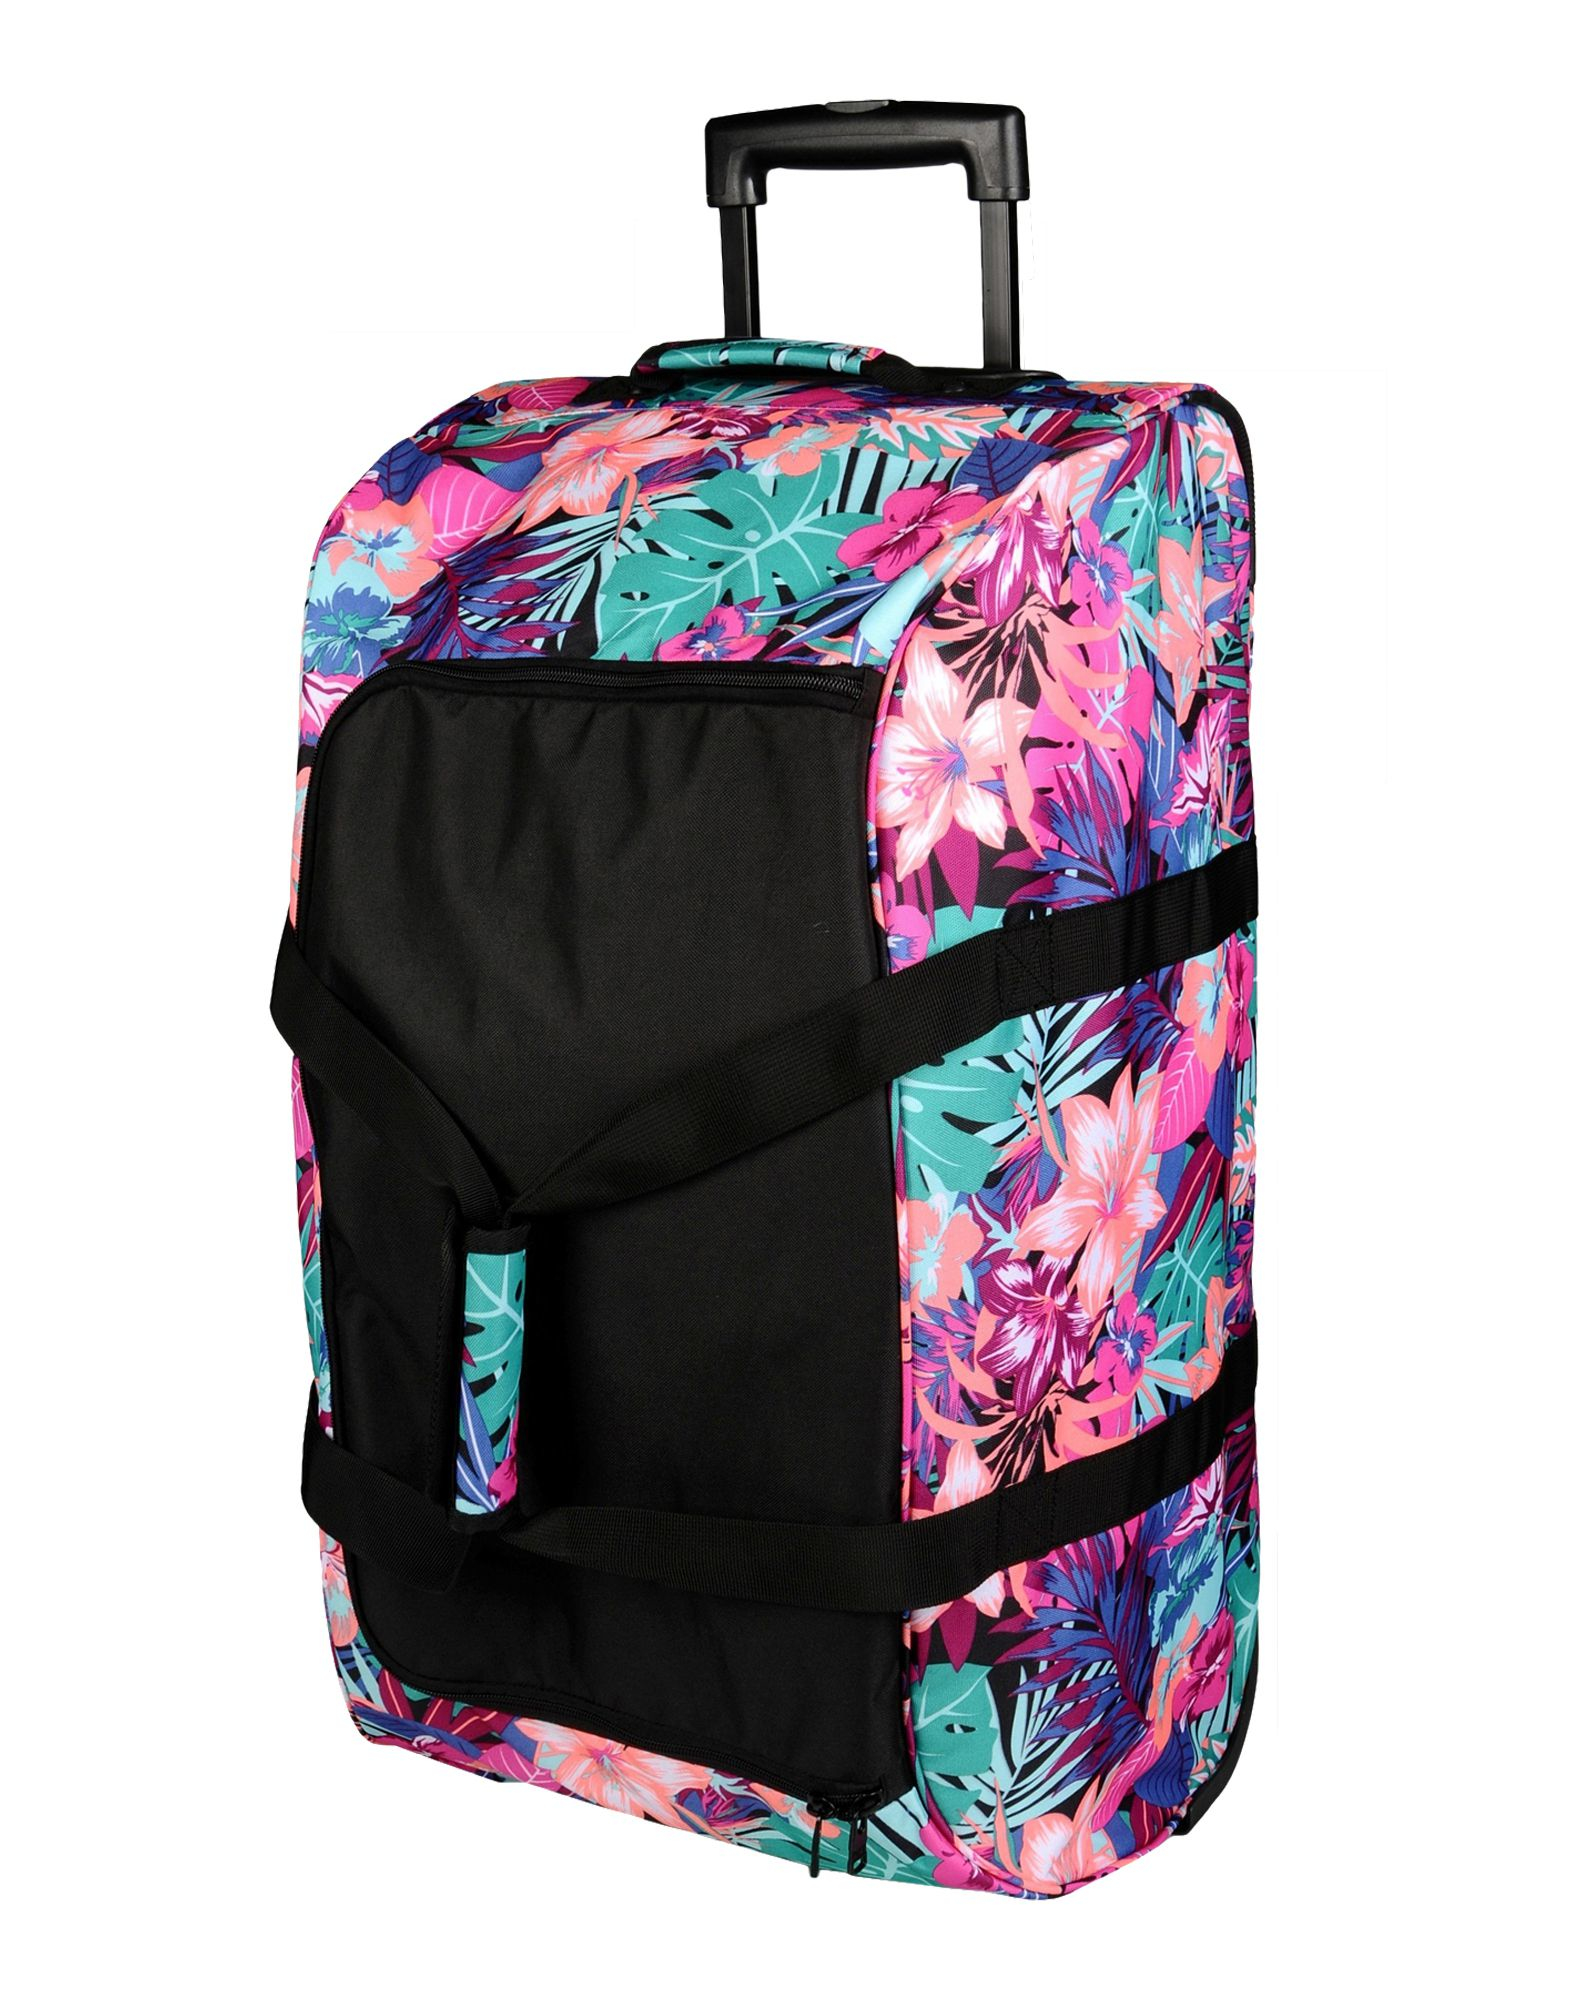 Roxy Canvas Wheeled Luggage in Light. roxy travel luggage. 